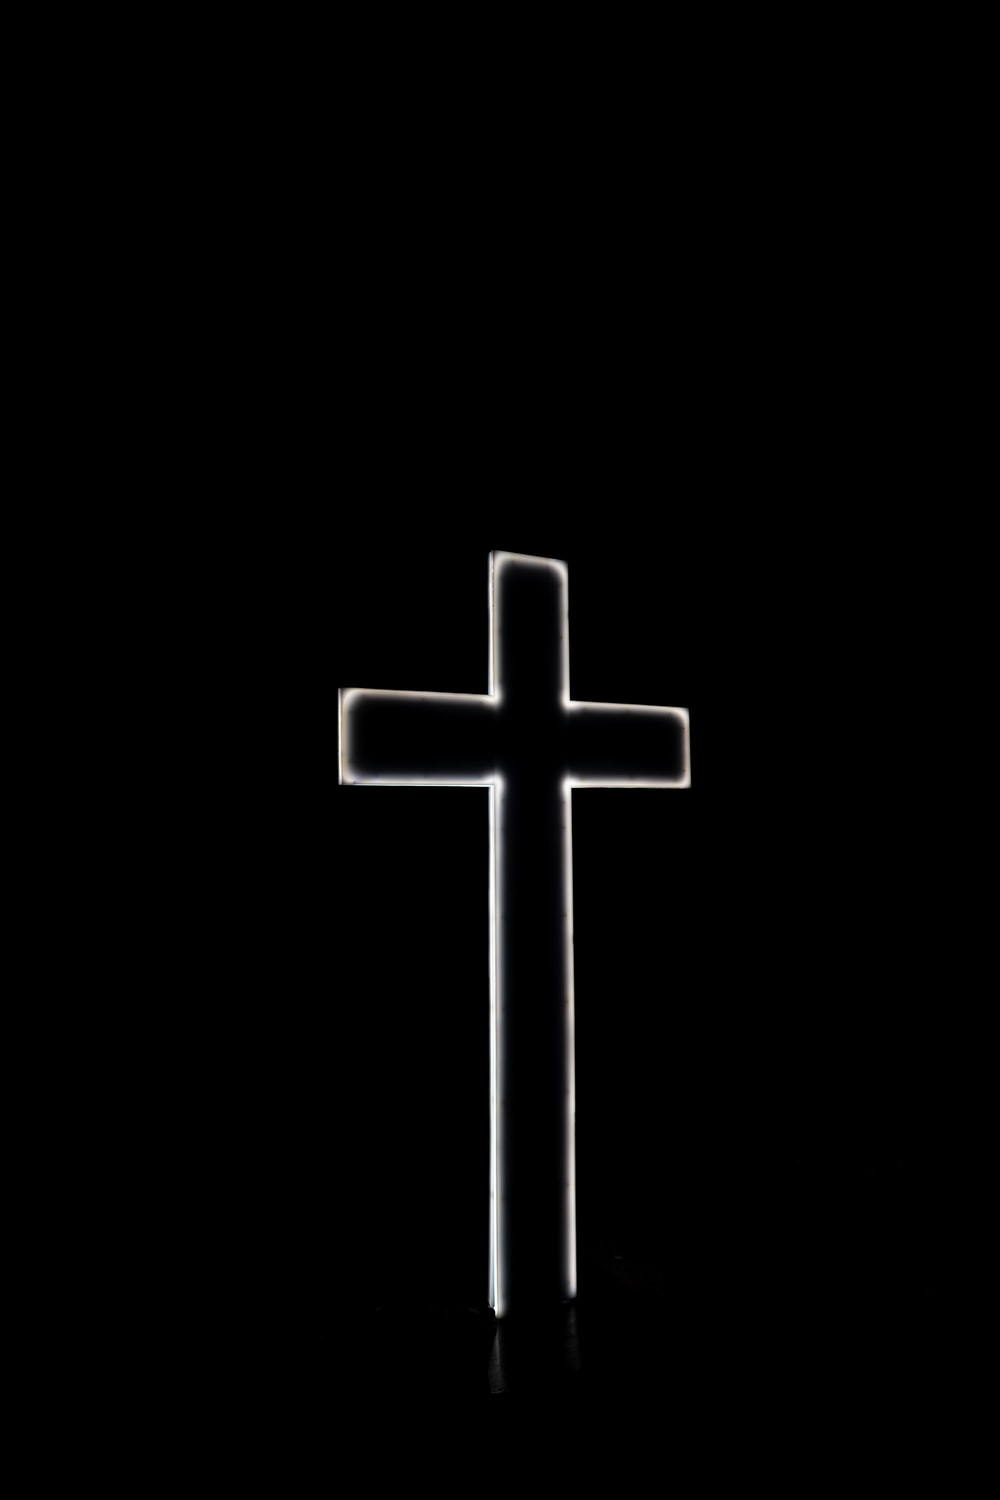 White Cross With Black Background Photo Image